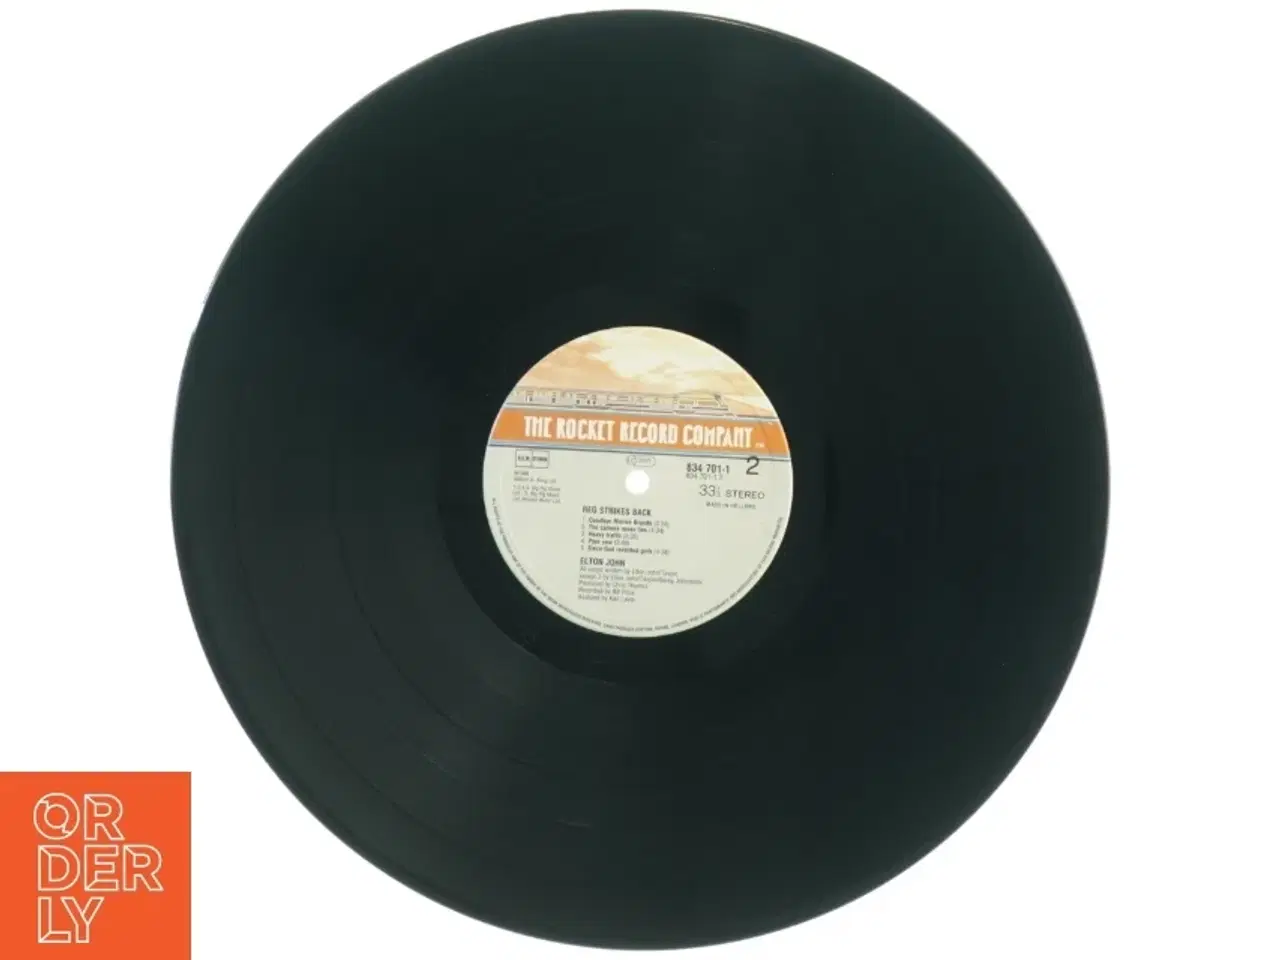 Billede 4 - Elton John - Reg Strikes Back LP fra The Rocket Record Company (str. 31 x 31 cm)